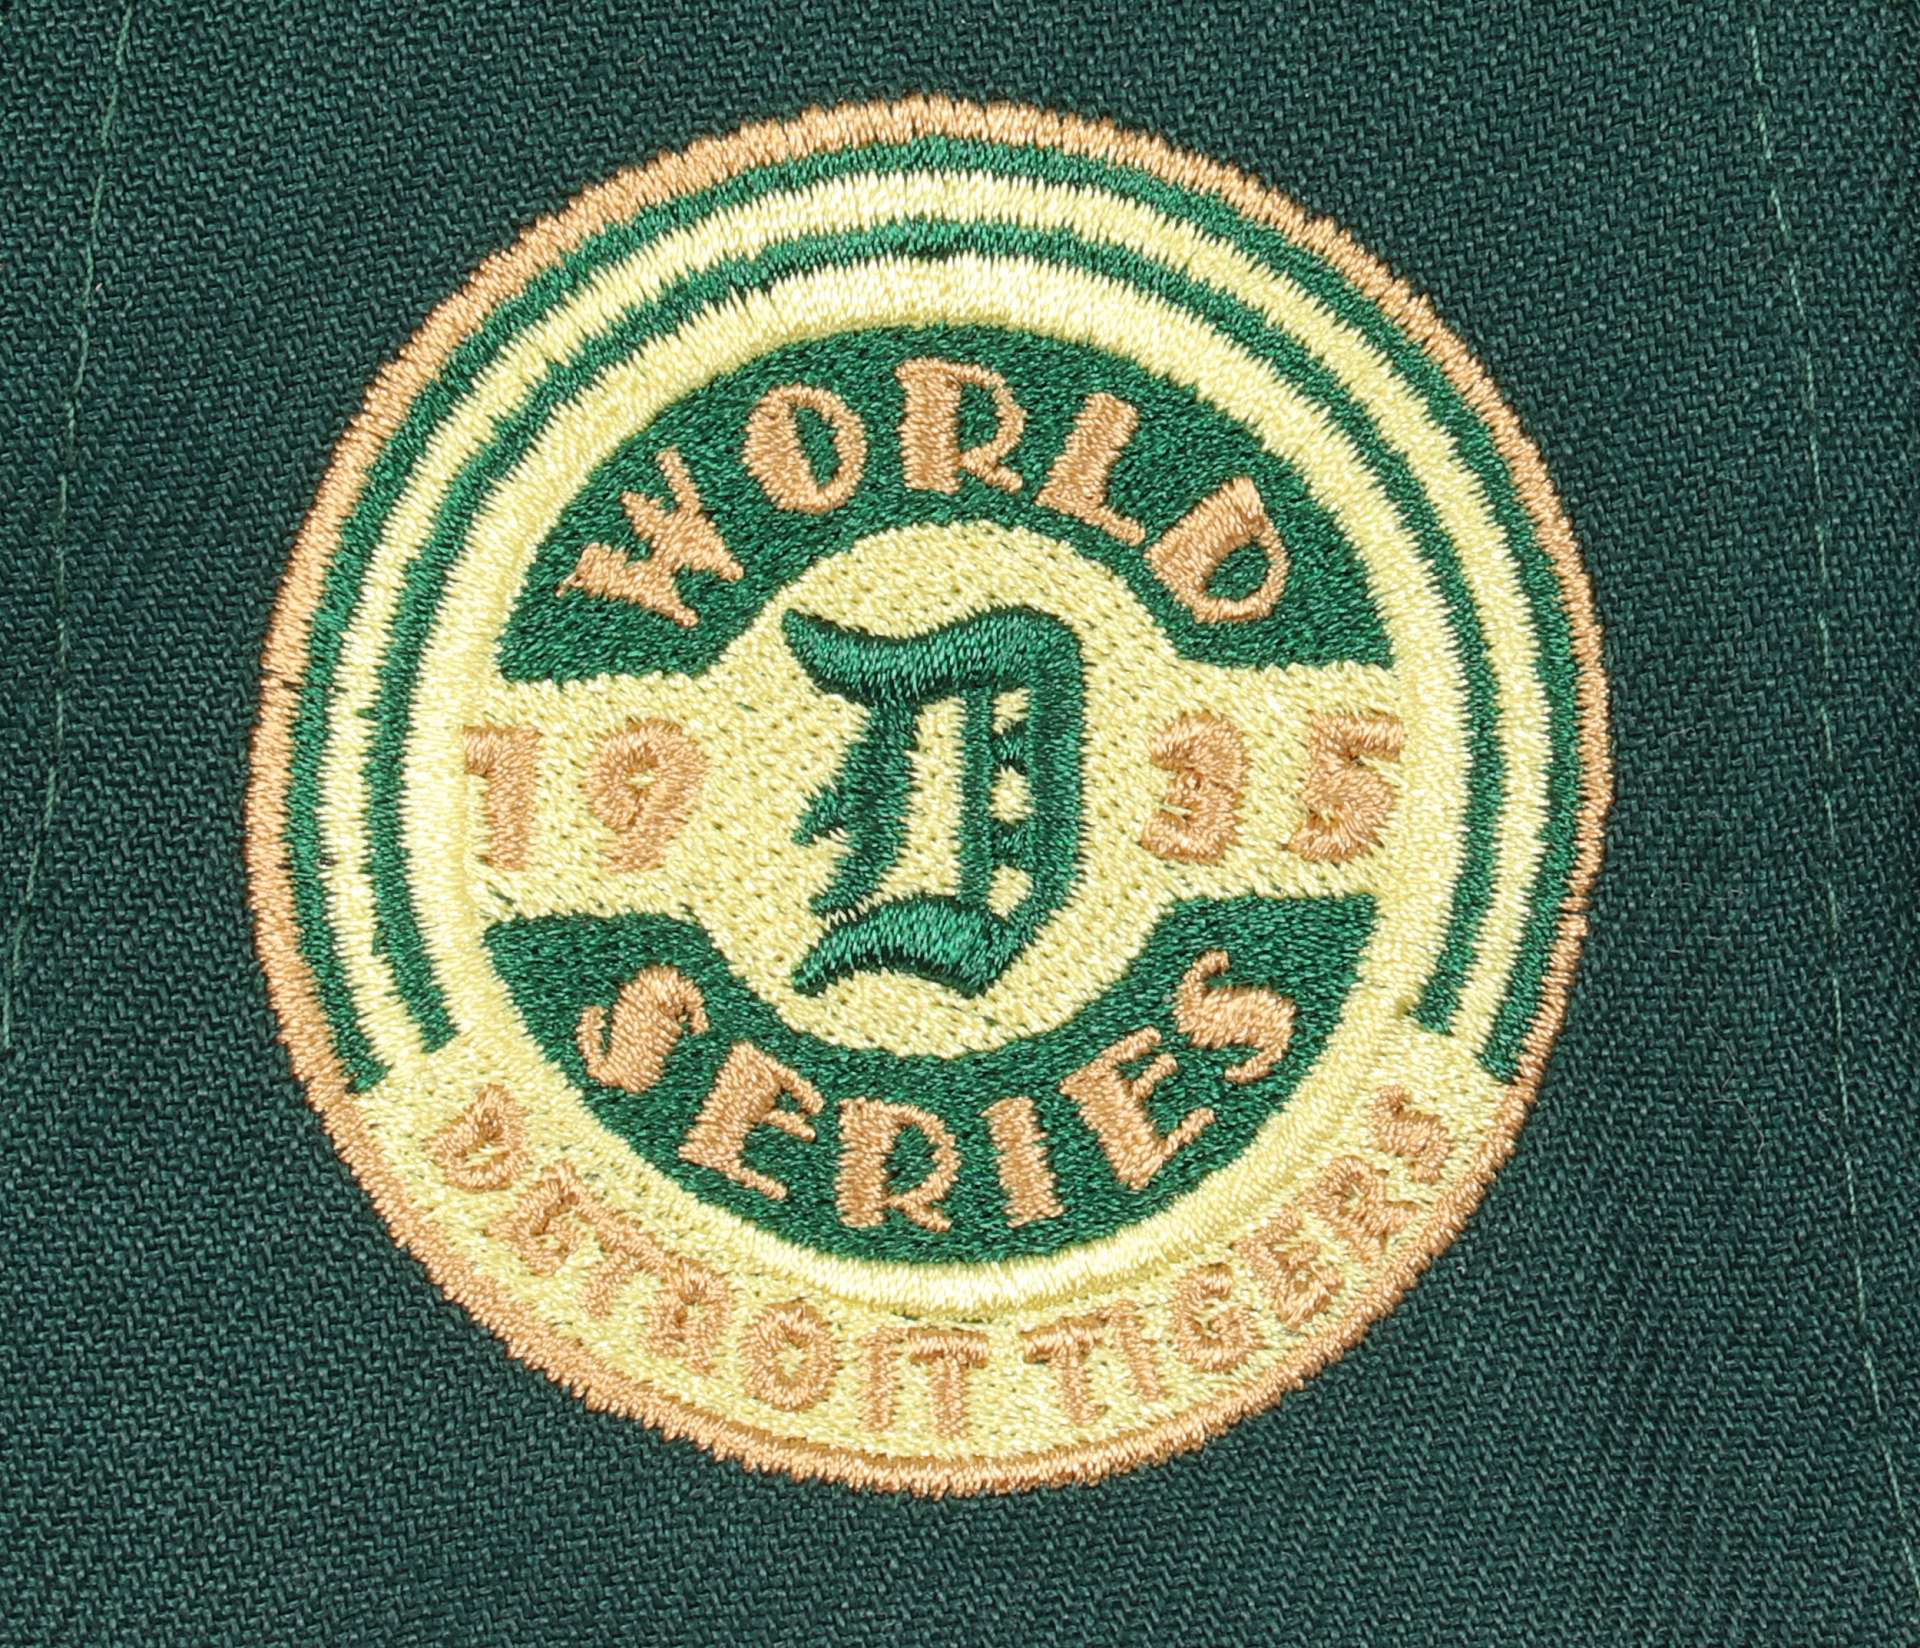 Detroit Tigers World Series 1935 MLB Green 59Fifty Basecap New Era